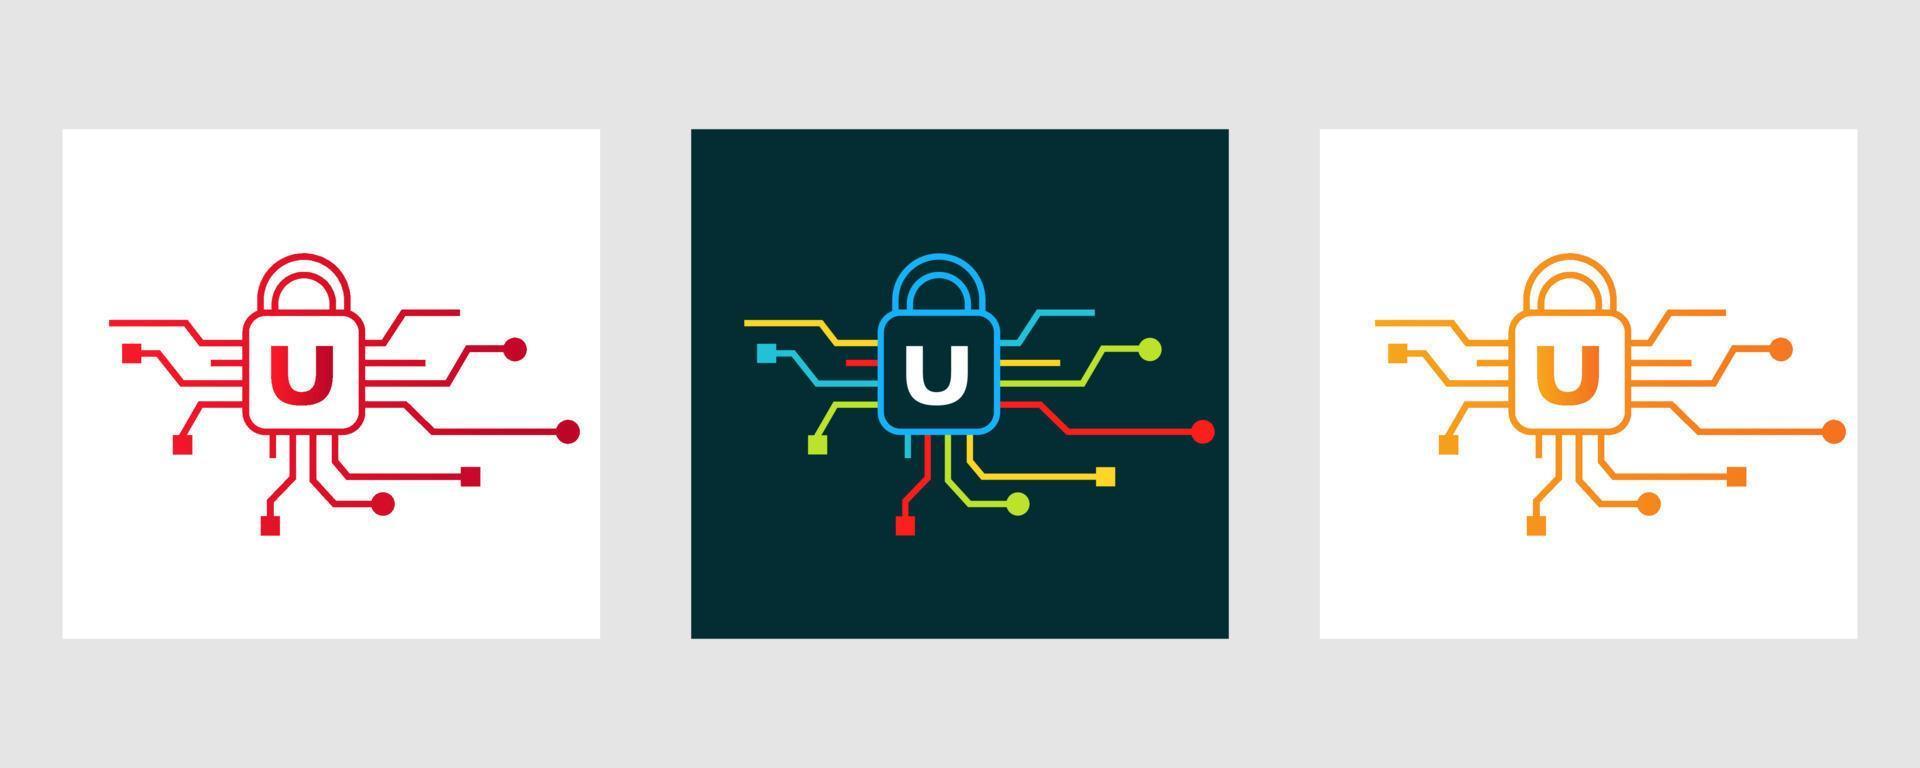 brief u cyber veiligheid logo. internet veiligheid teken, cyber bescherming, technologie, biotechnologie symbool vector